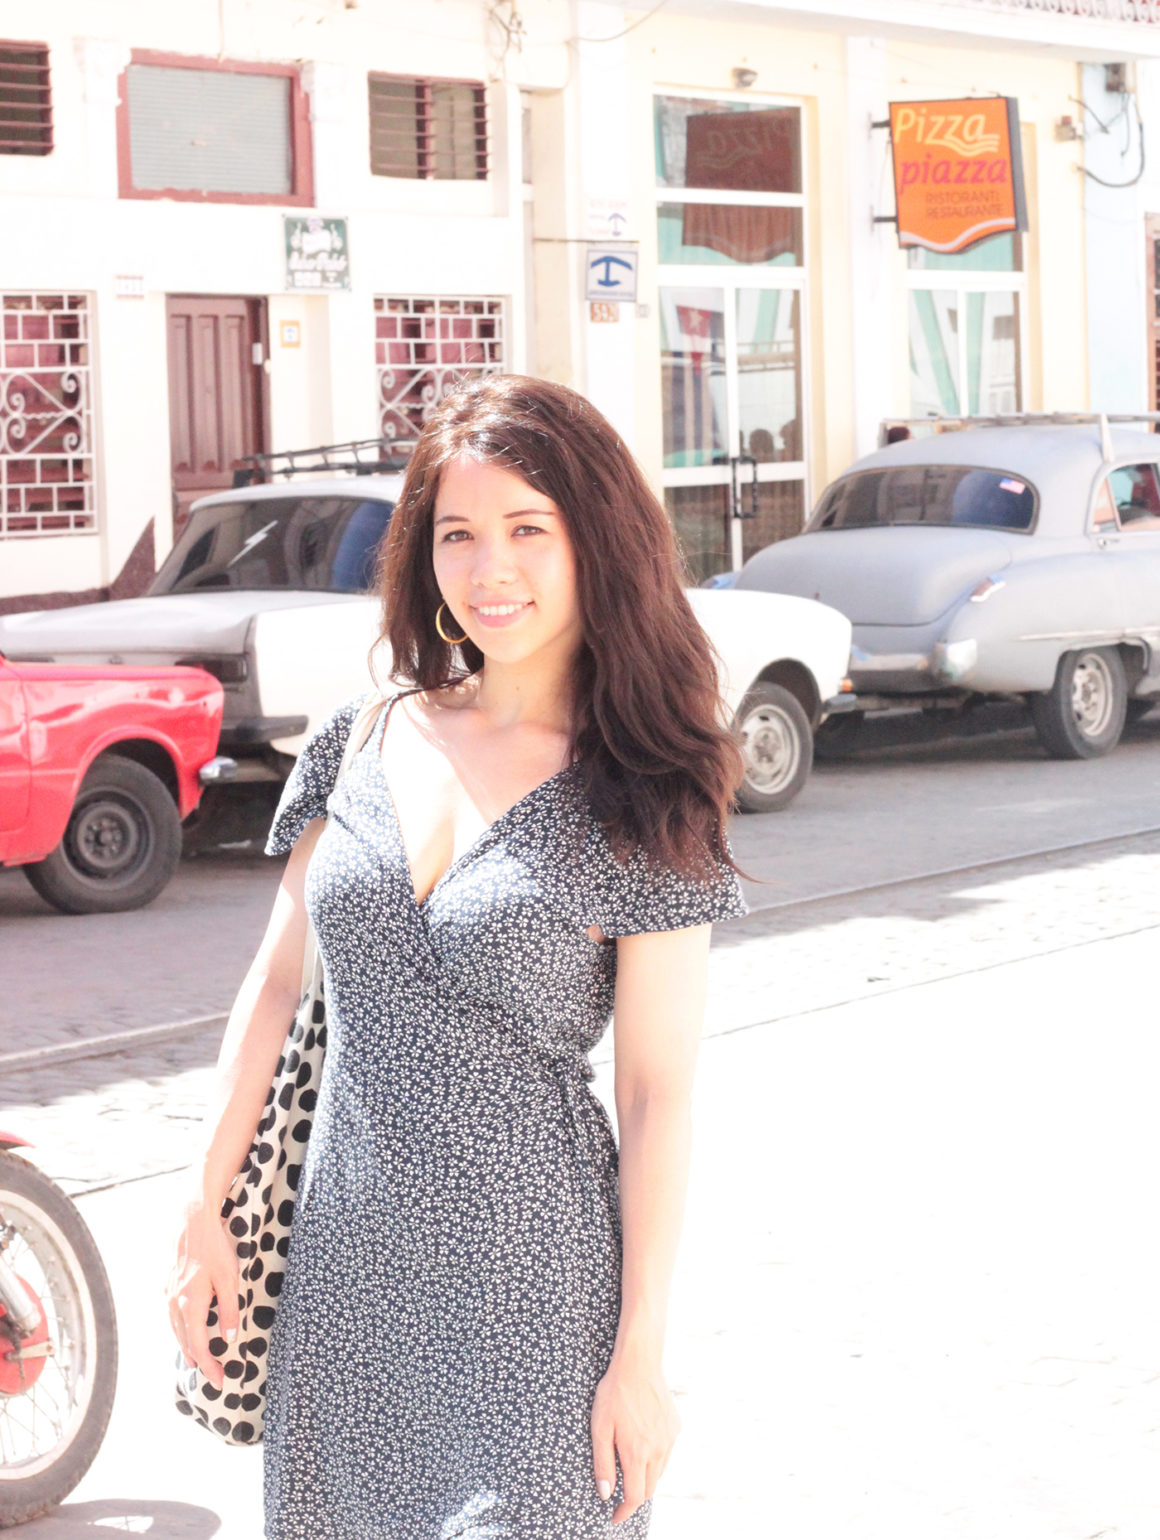 Things to do in Cienfuegos, Cuba